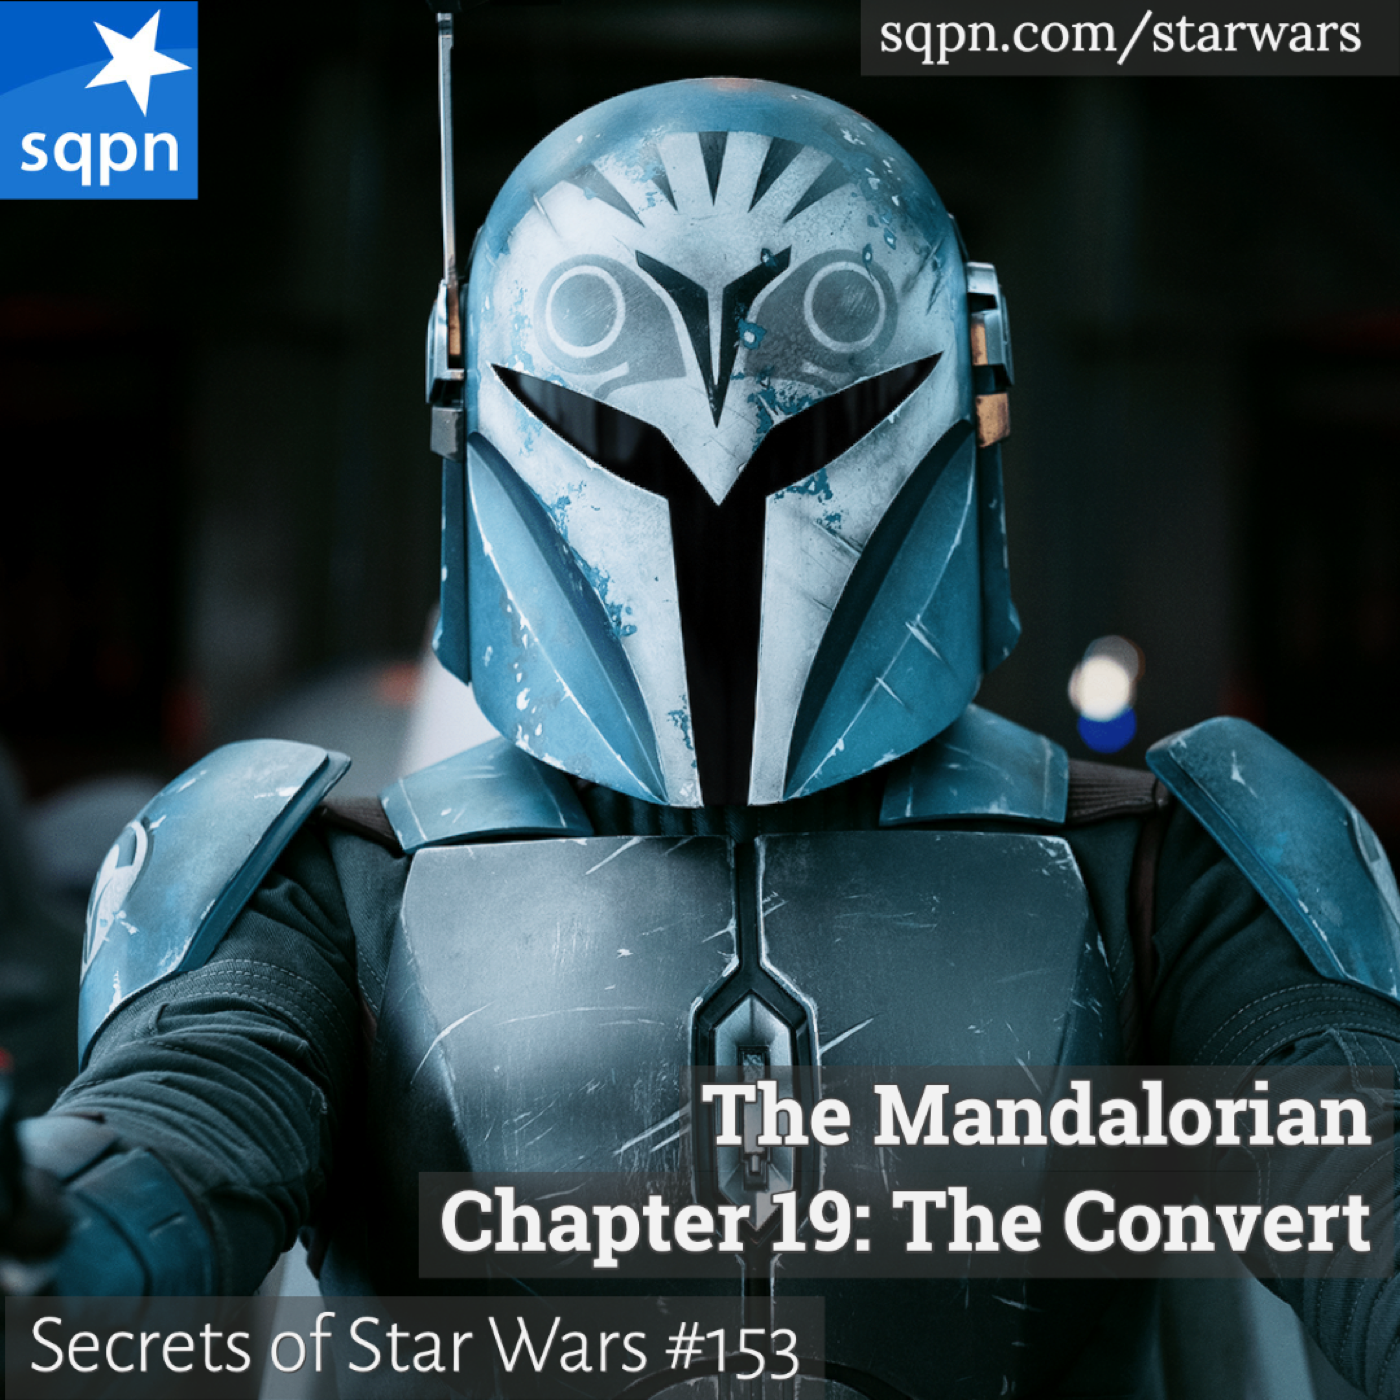 The Mandalorian, Ch. 19: The Convert